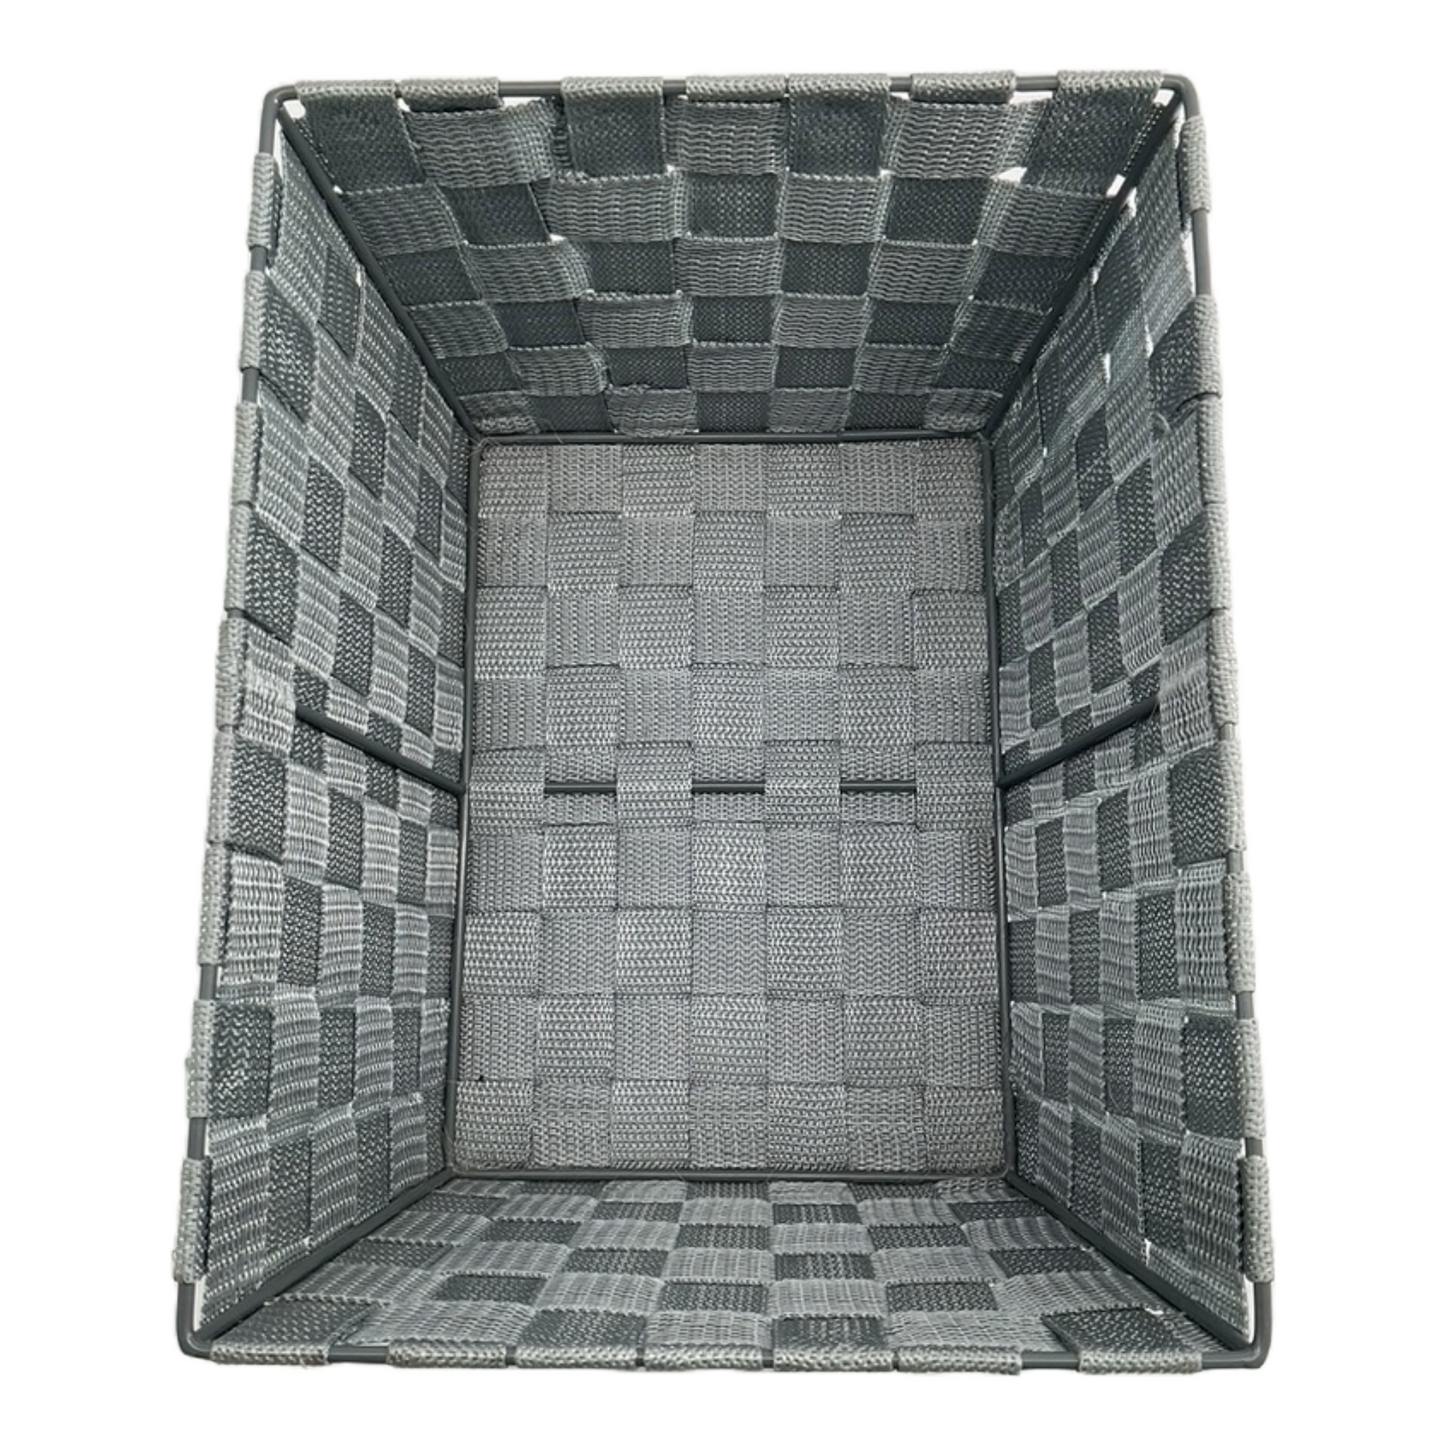 Cubby Baskets (3 Gray Pieces) - Size (6 H x 11 D x 9 W)